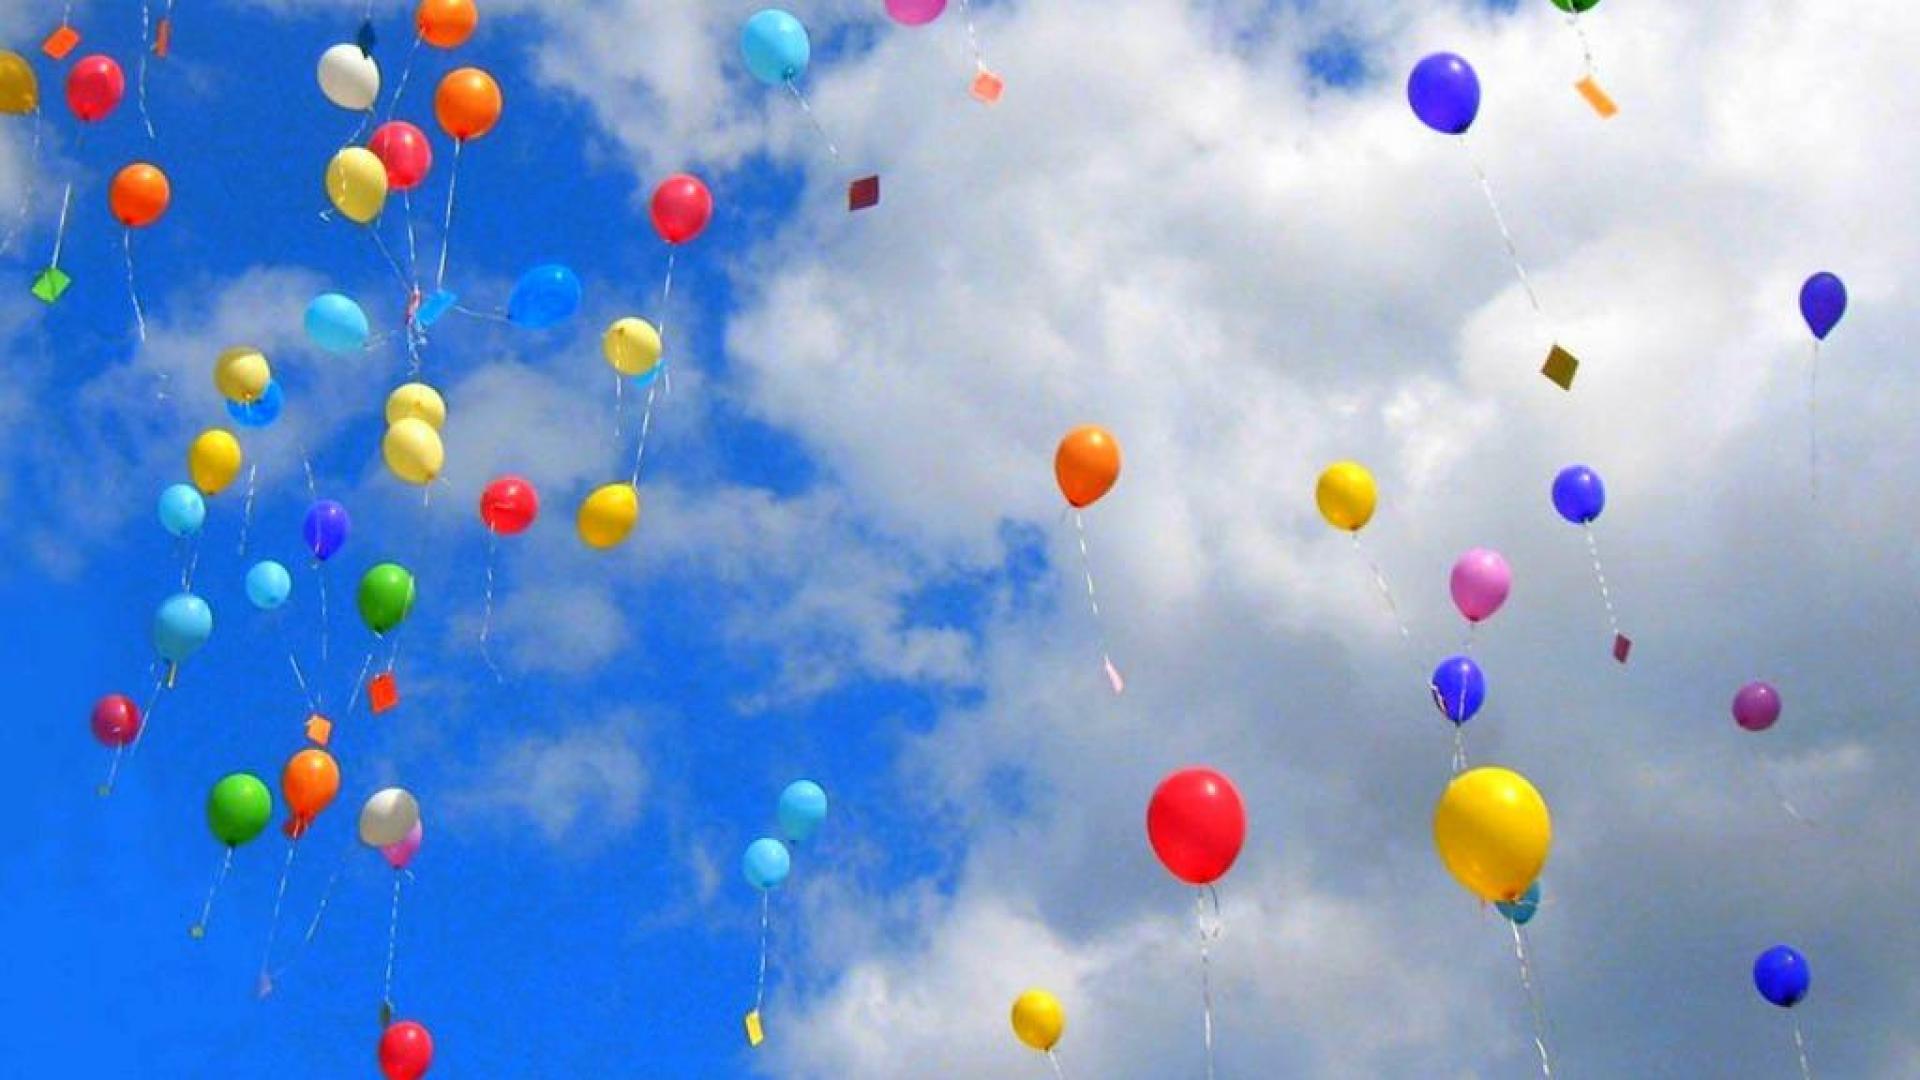 wallpaper balon,balloon,blue,party supply,sky,colorfulness